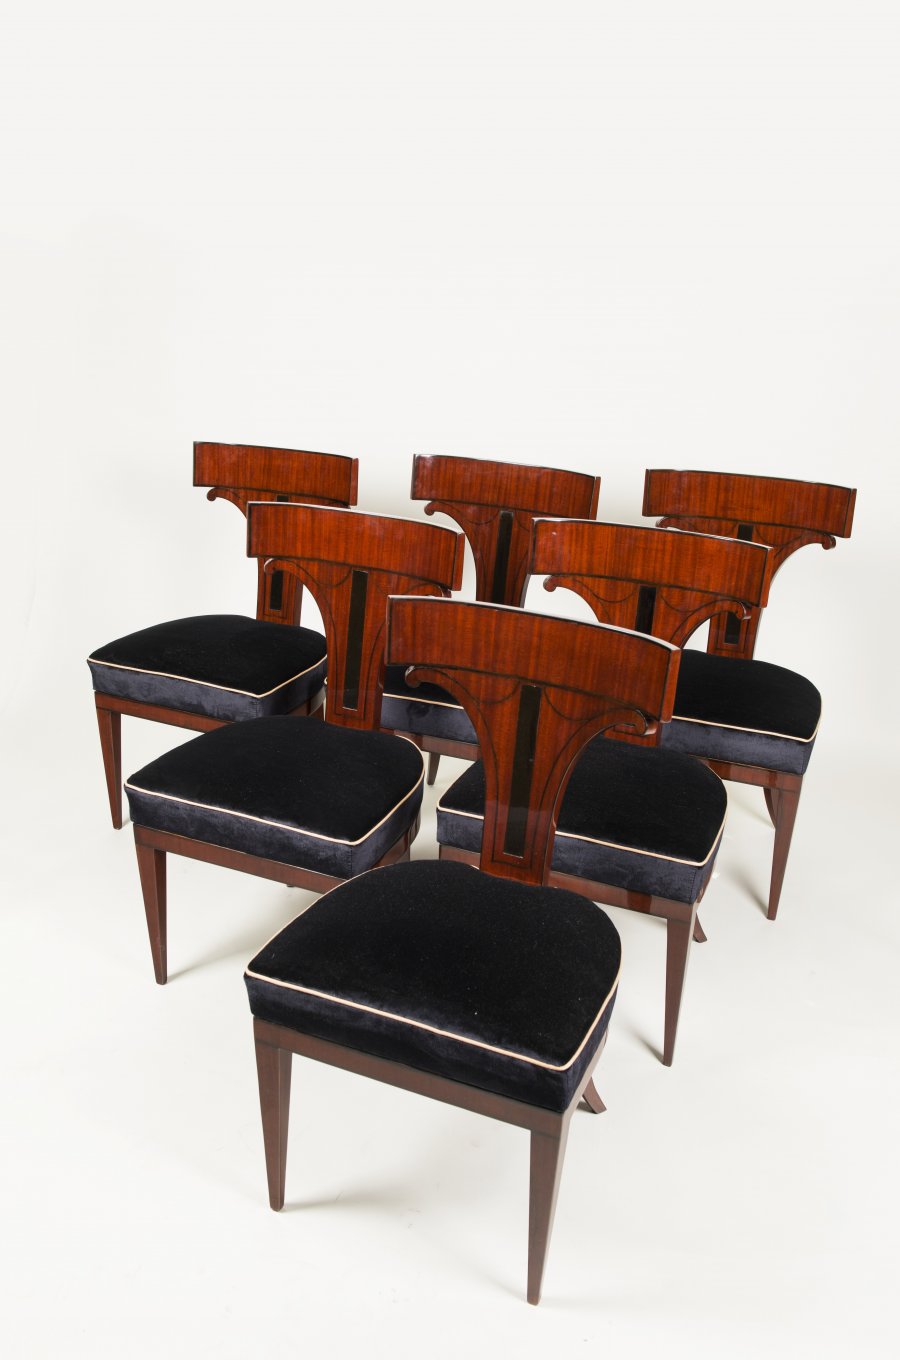 A Group of Biedermeier Chairs